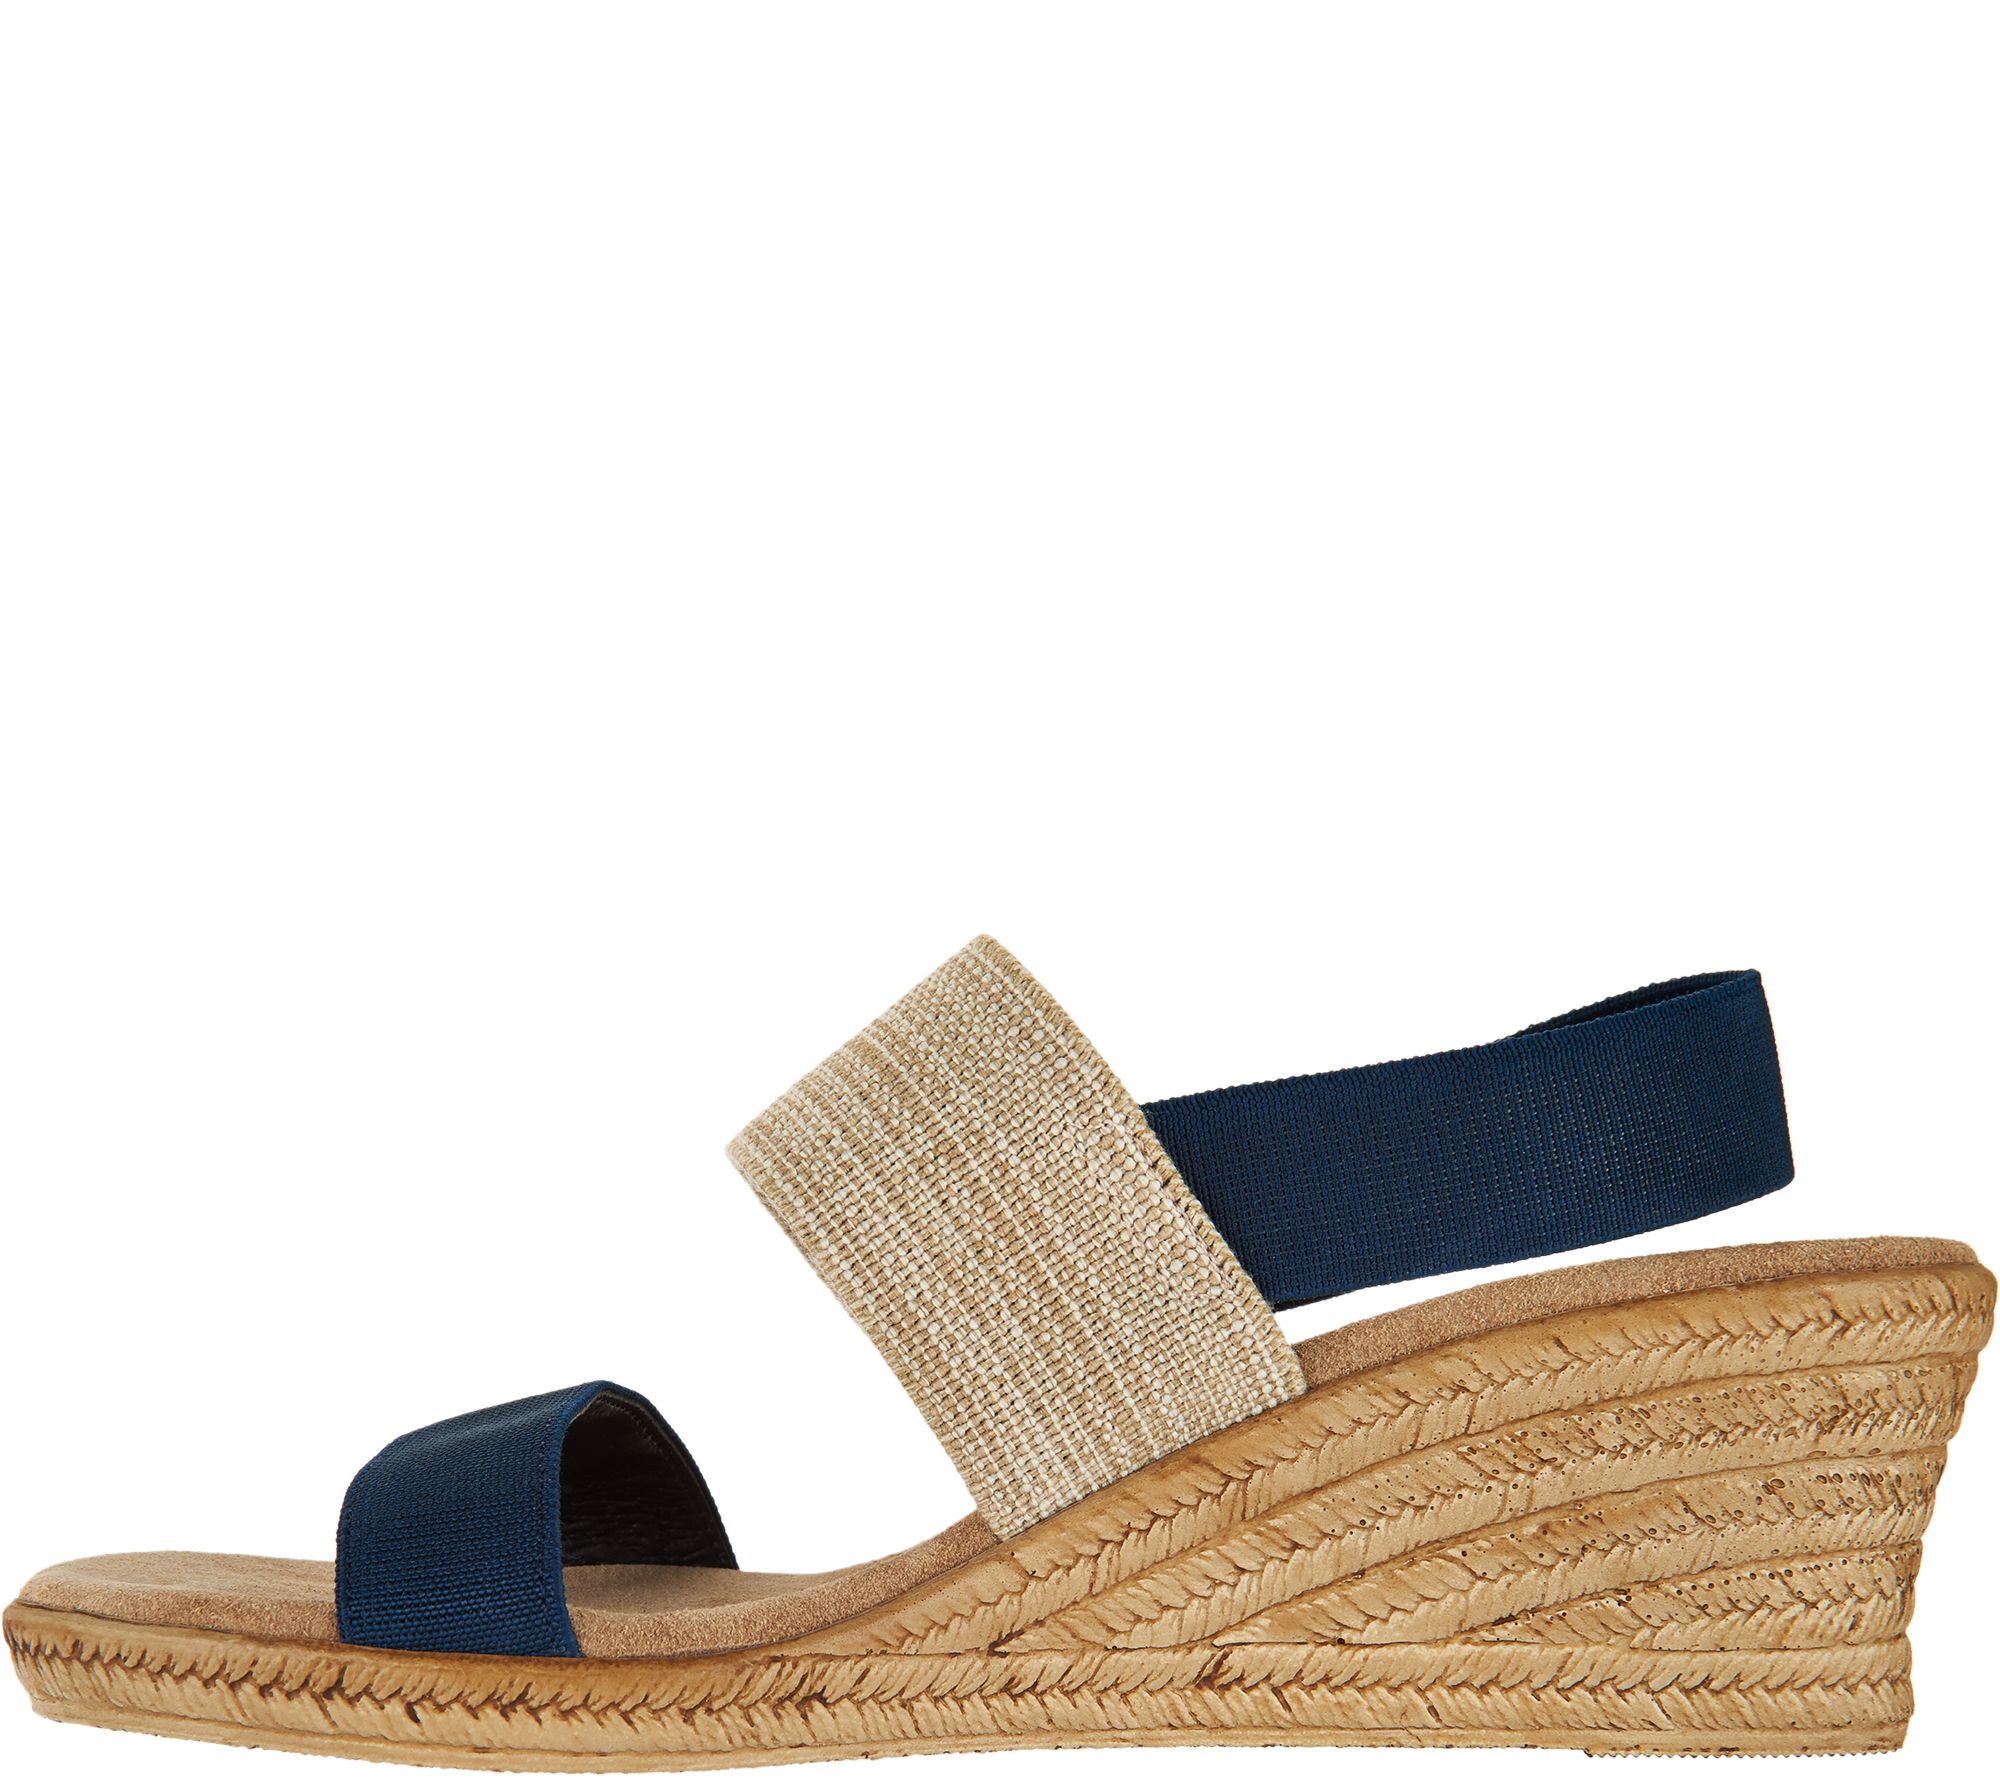 Charleston Shoe Co. Colorblocked Wedge Sandals - Cooper - QVC.com